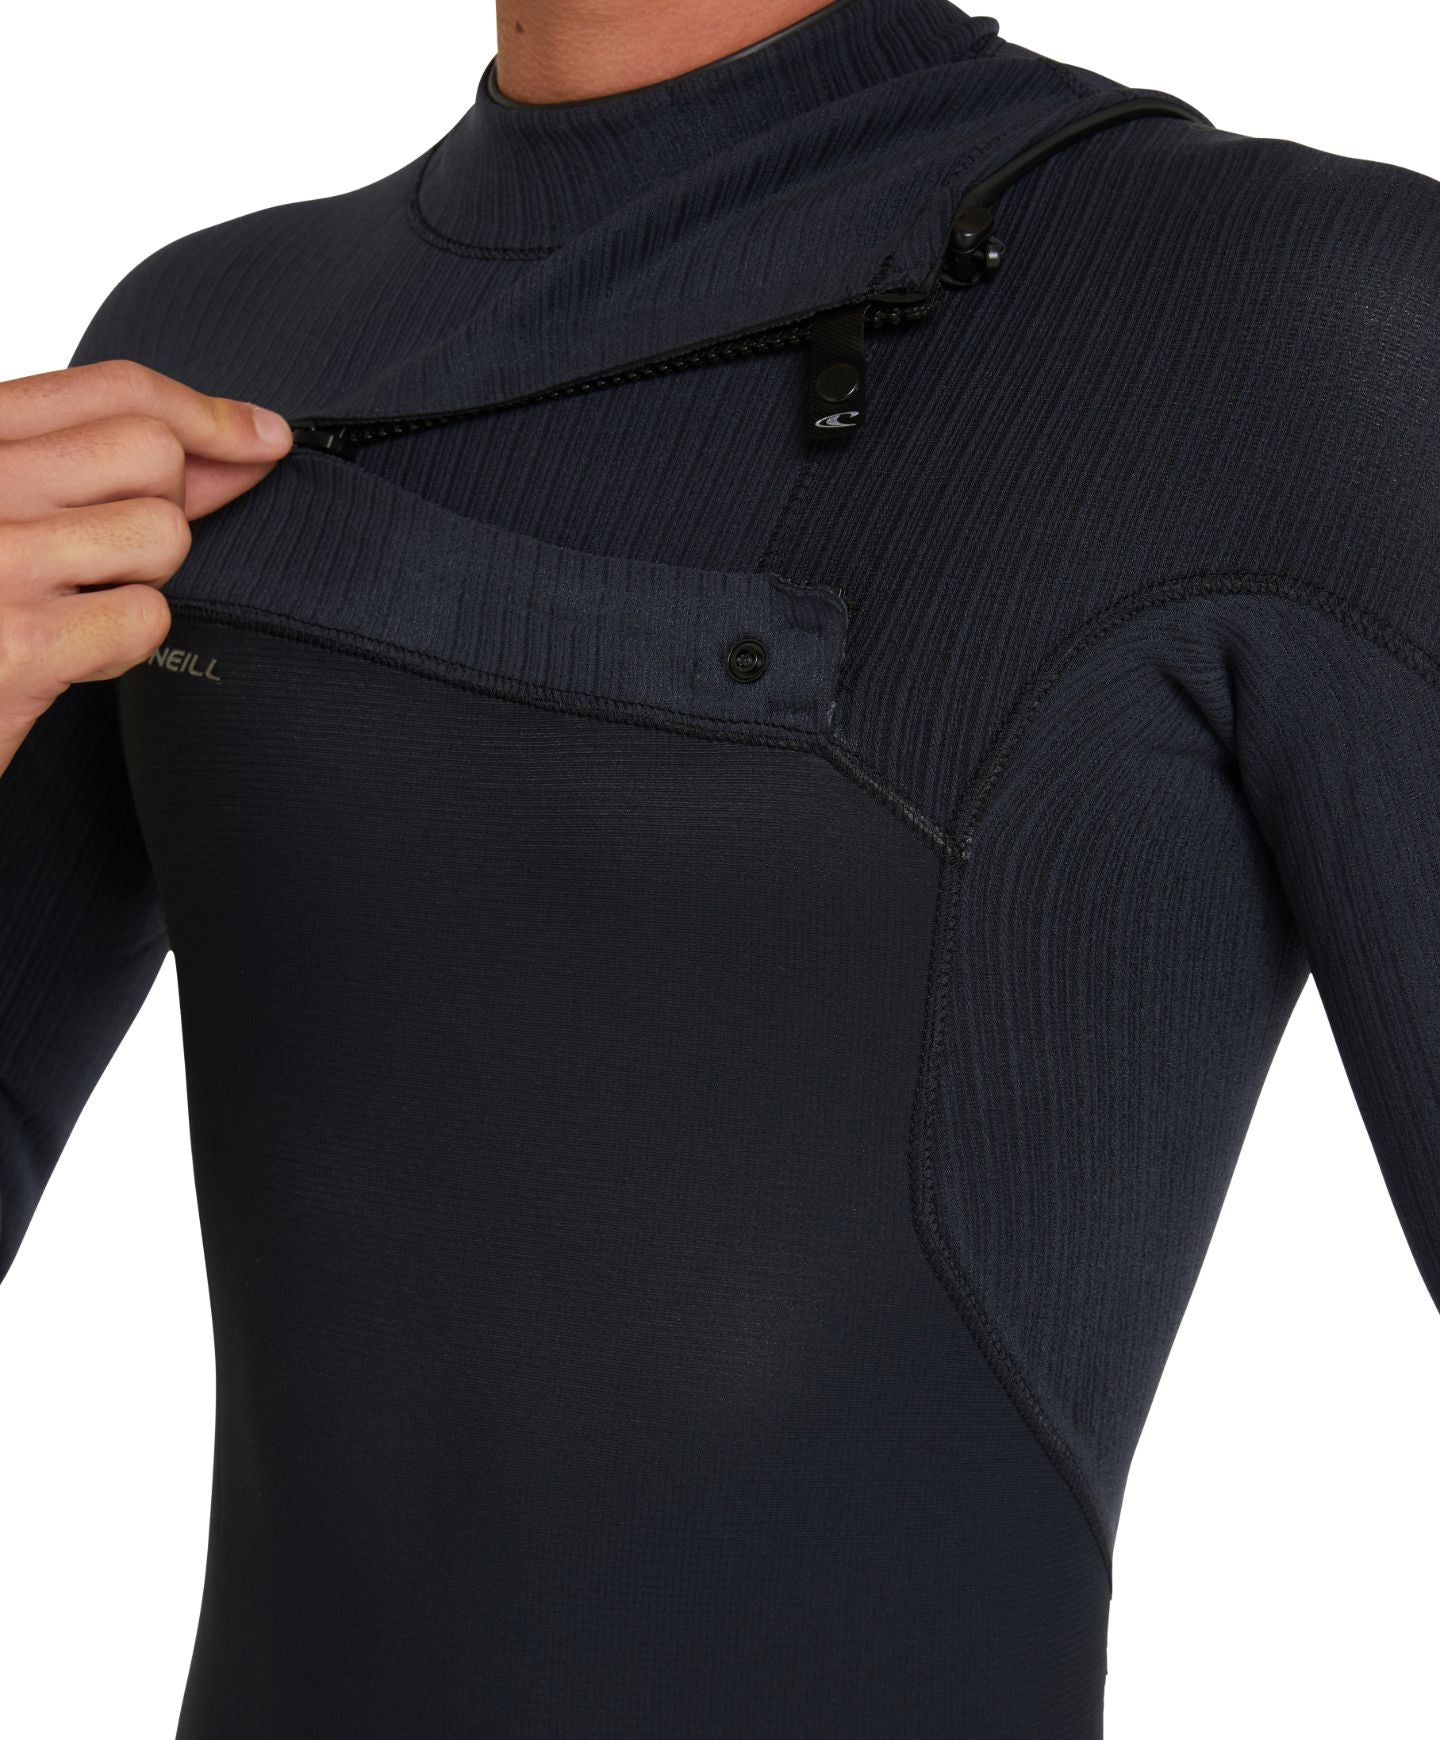 Buy HyperFreak 3/2+ Steamer Chest Zip Wetsuit - Black by O'Neill online ...